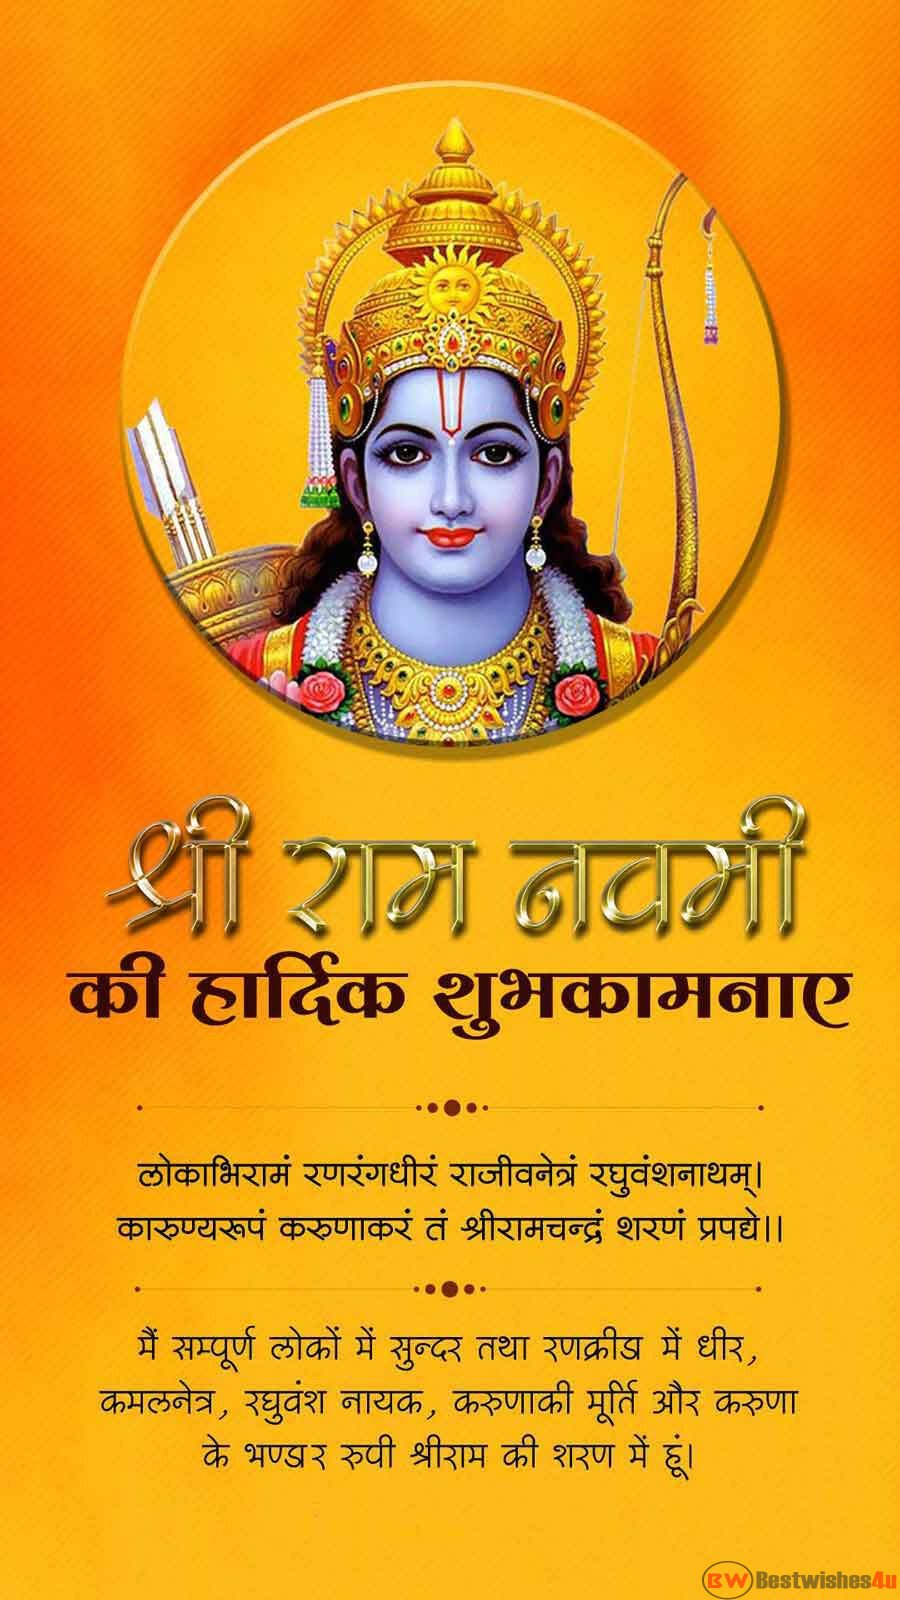 Happy Ram Navami Wishes In Hindi